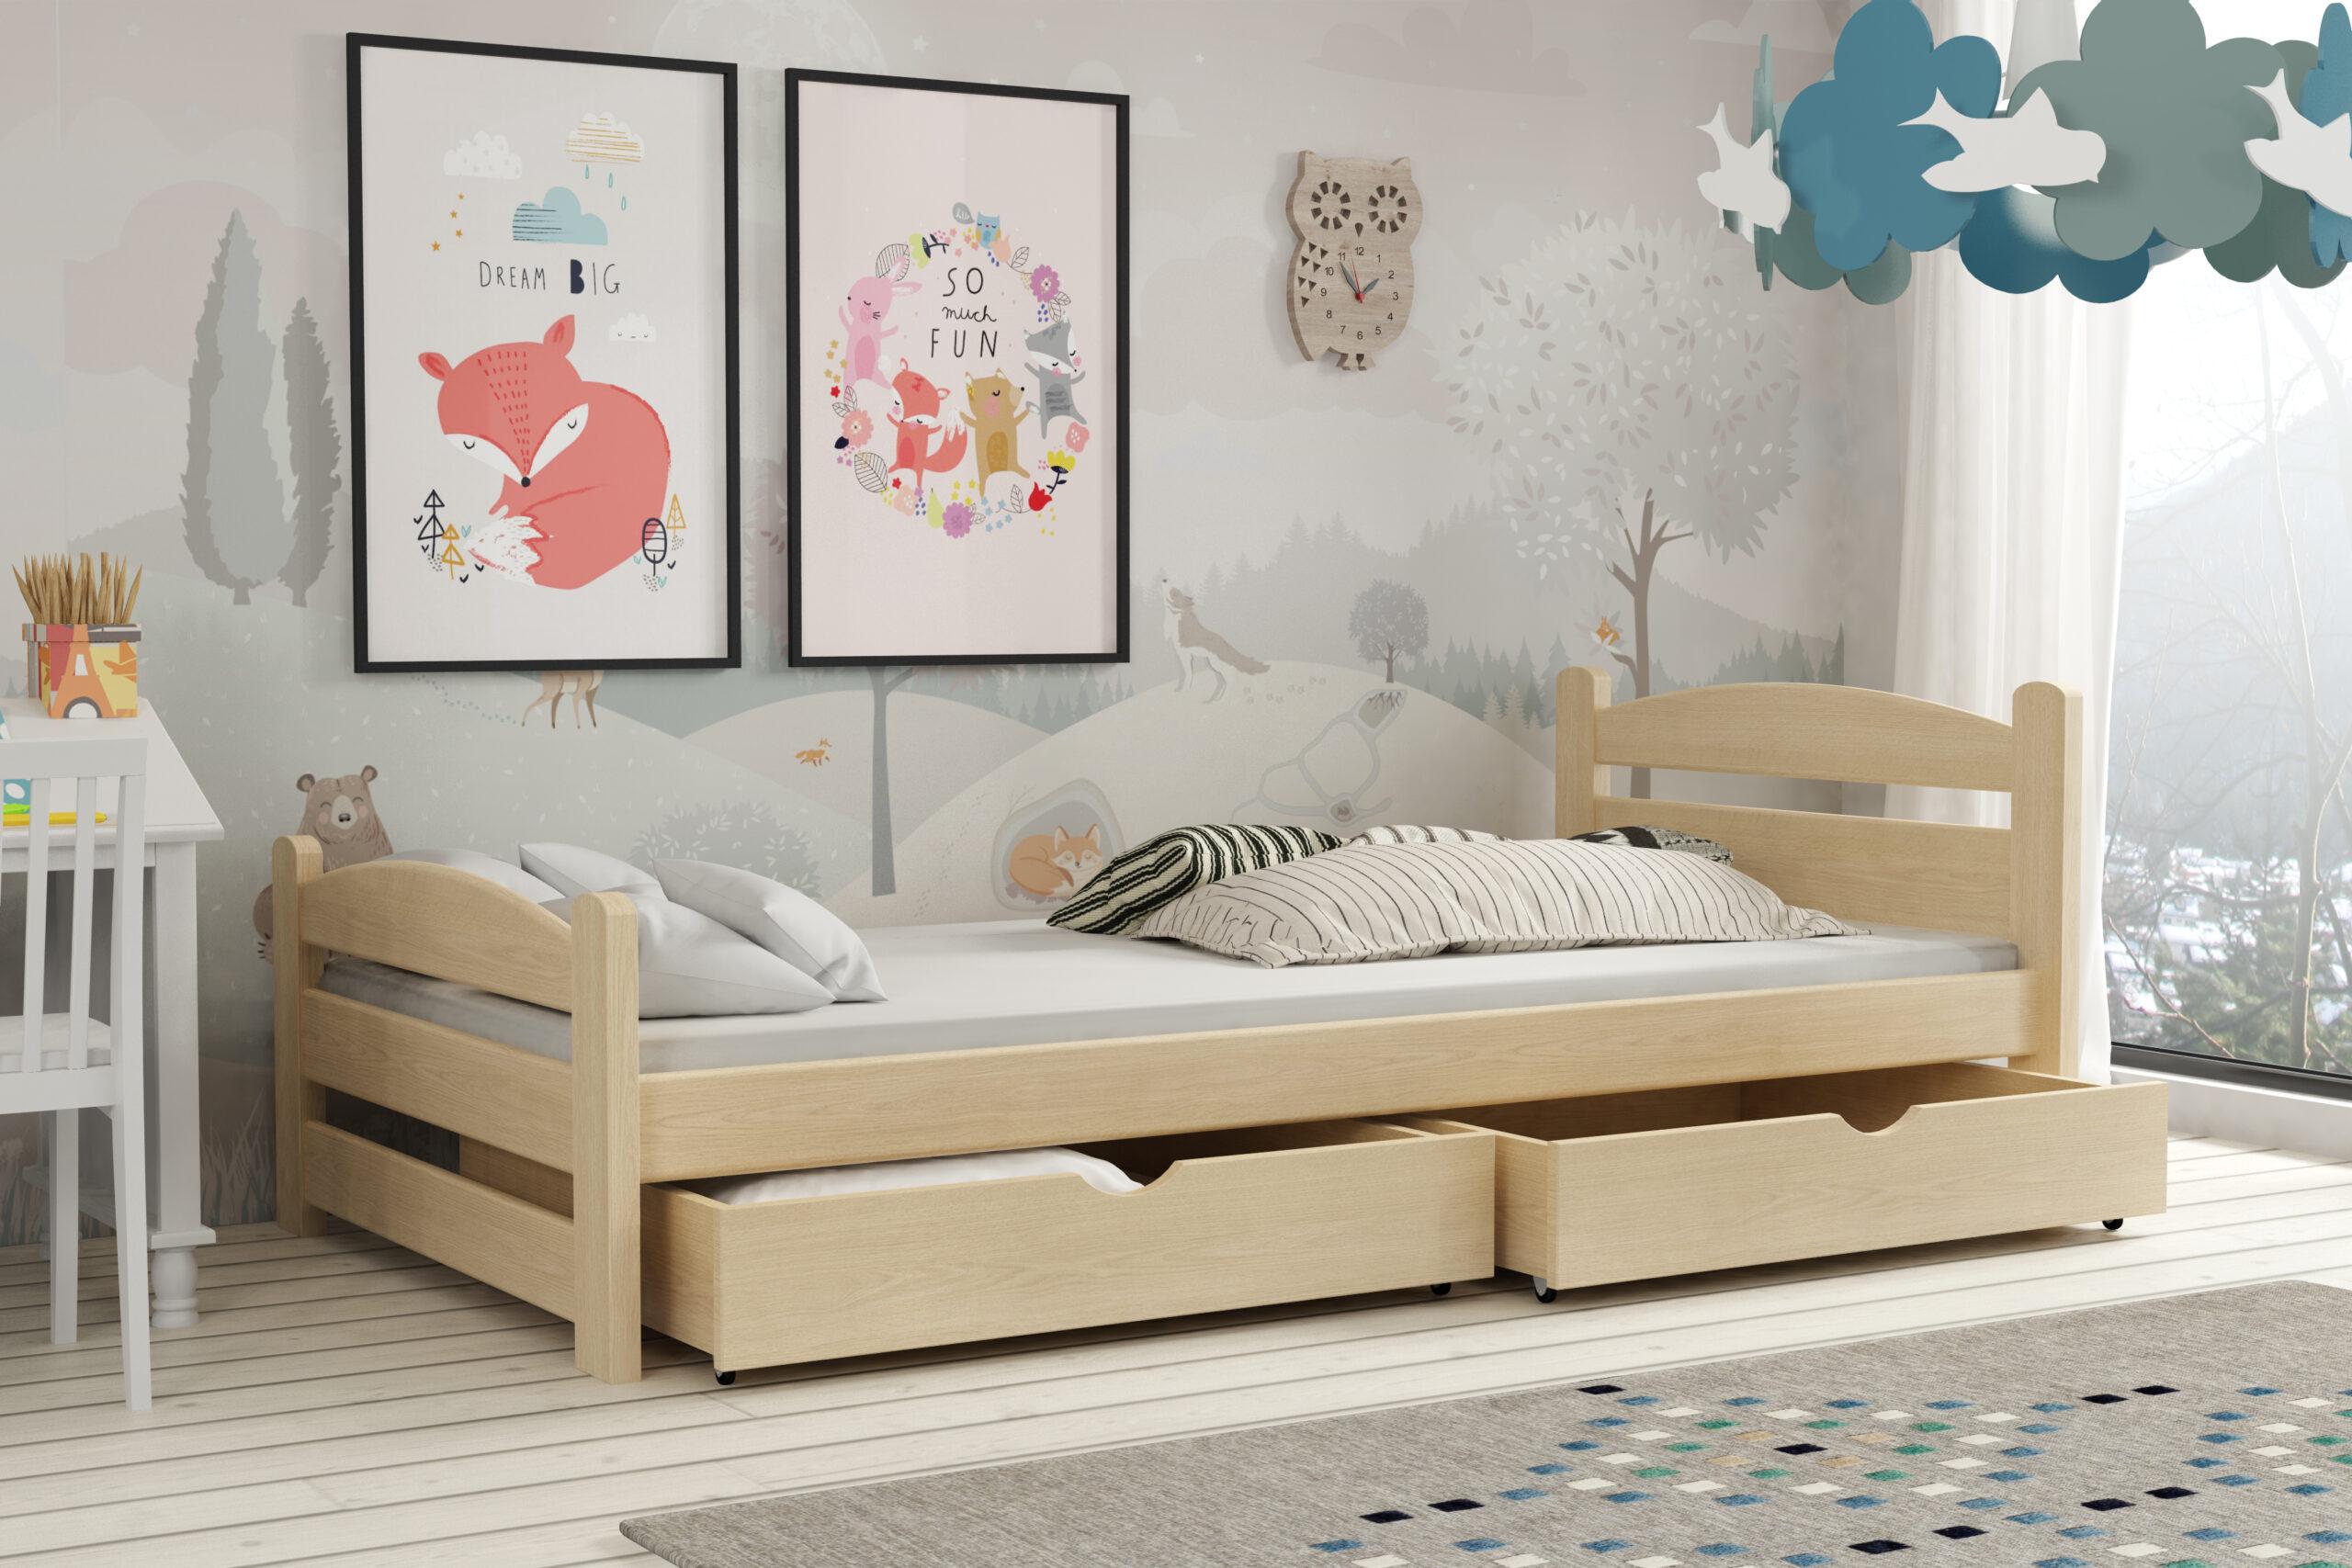 Dětská postel MAXÍK KIDBED ONE ze dřeva + rošt Barva: surové dřevo, Rozměr: 80 x 200 cm, Zásuvky: ano